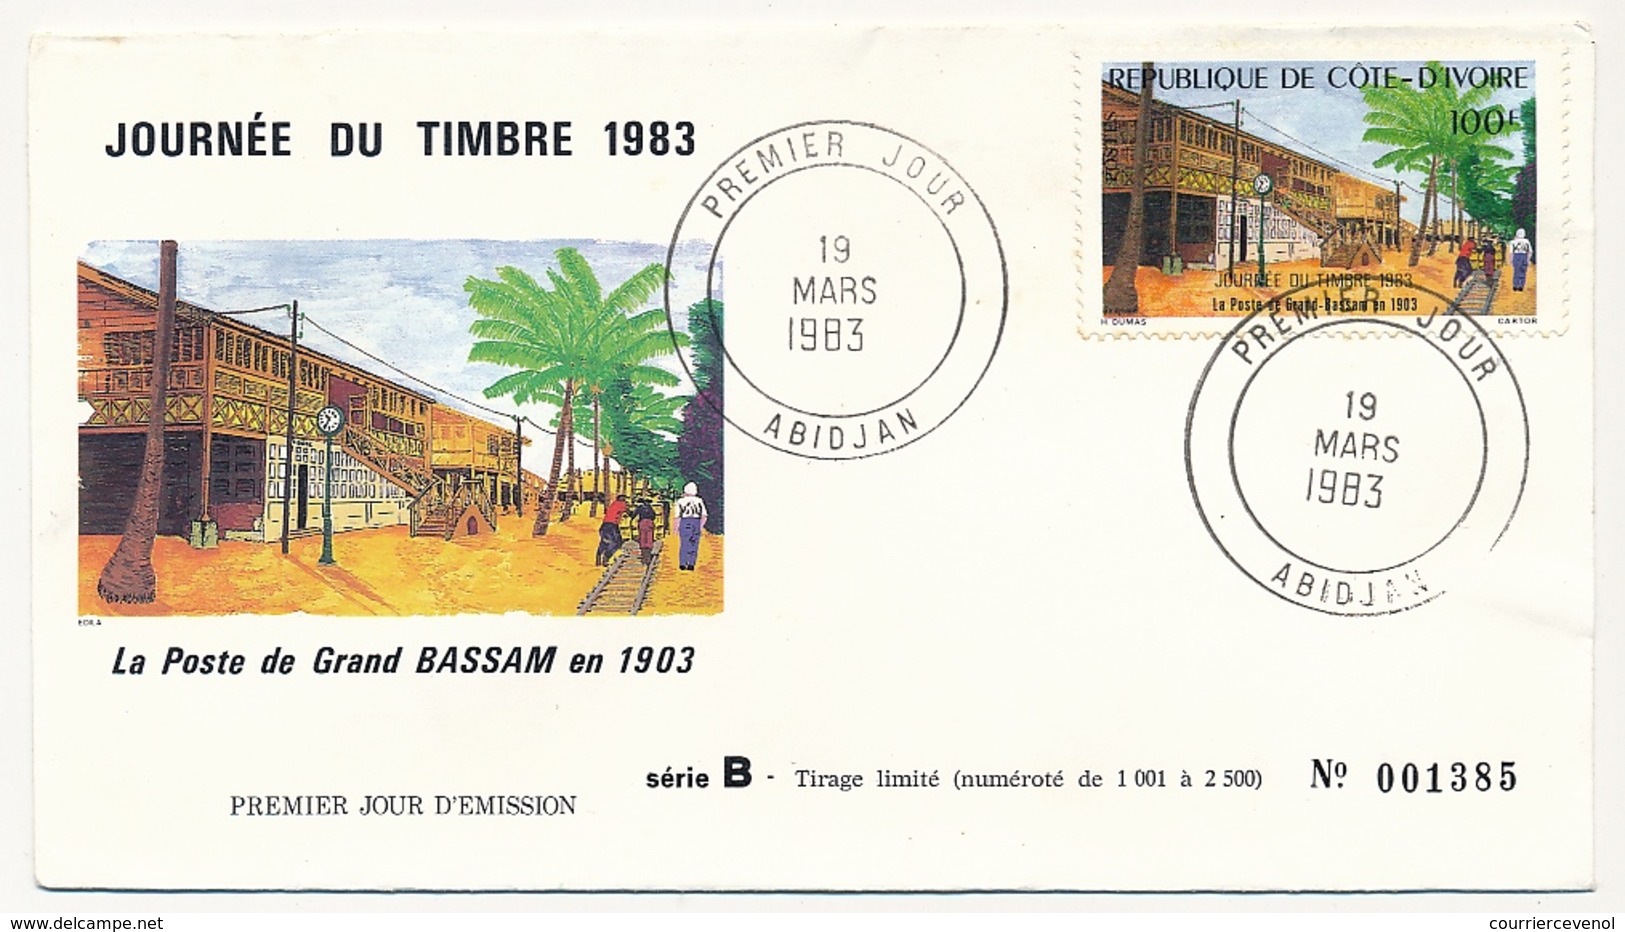 Côte D'Ivoire => Enveloppe FDC - 100f La Poste De Grand Bassam En 1903 - ABIDJAN - 19 Mars 1983 - Costa De Marfil (1960-...)